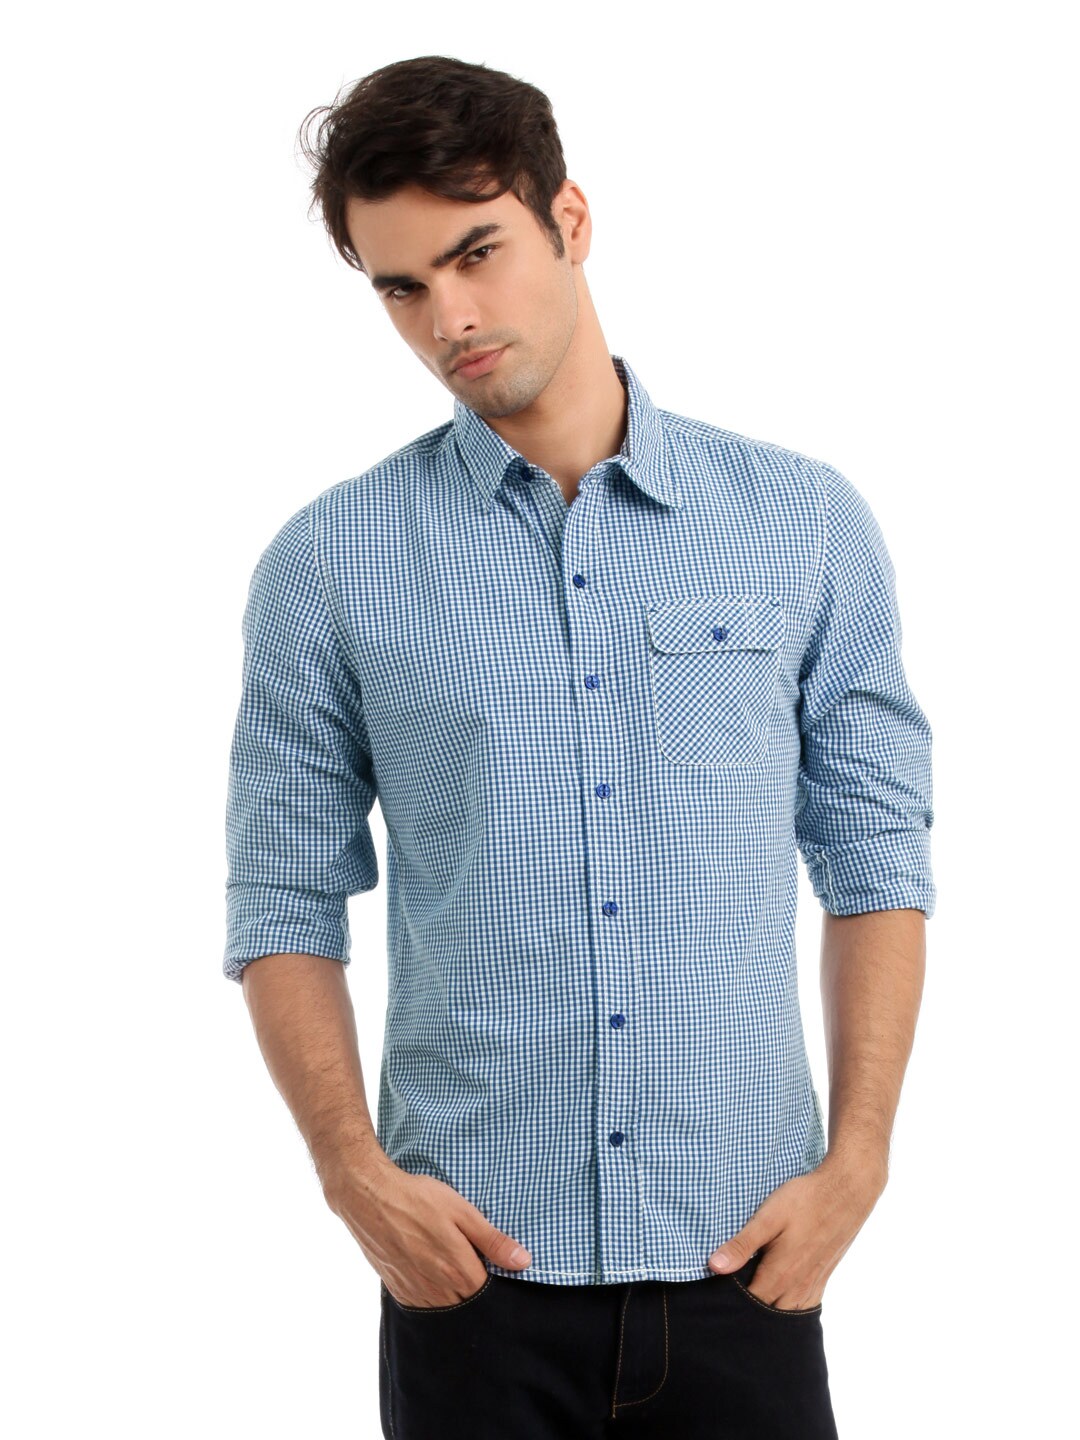 ADIDAS Men Blue & White Check Shirt